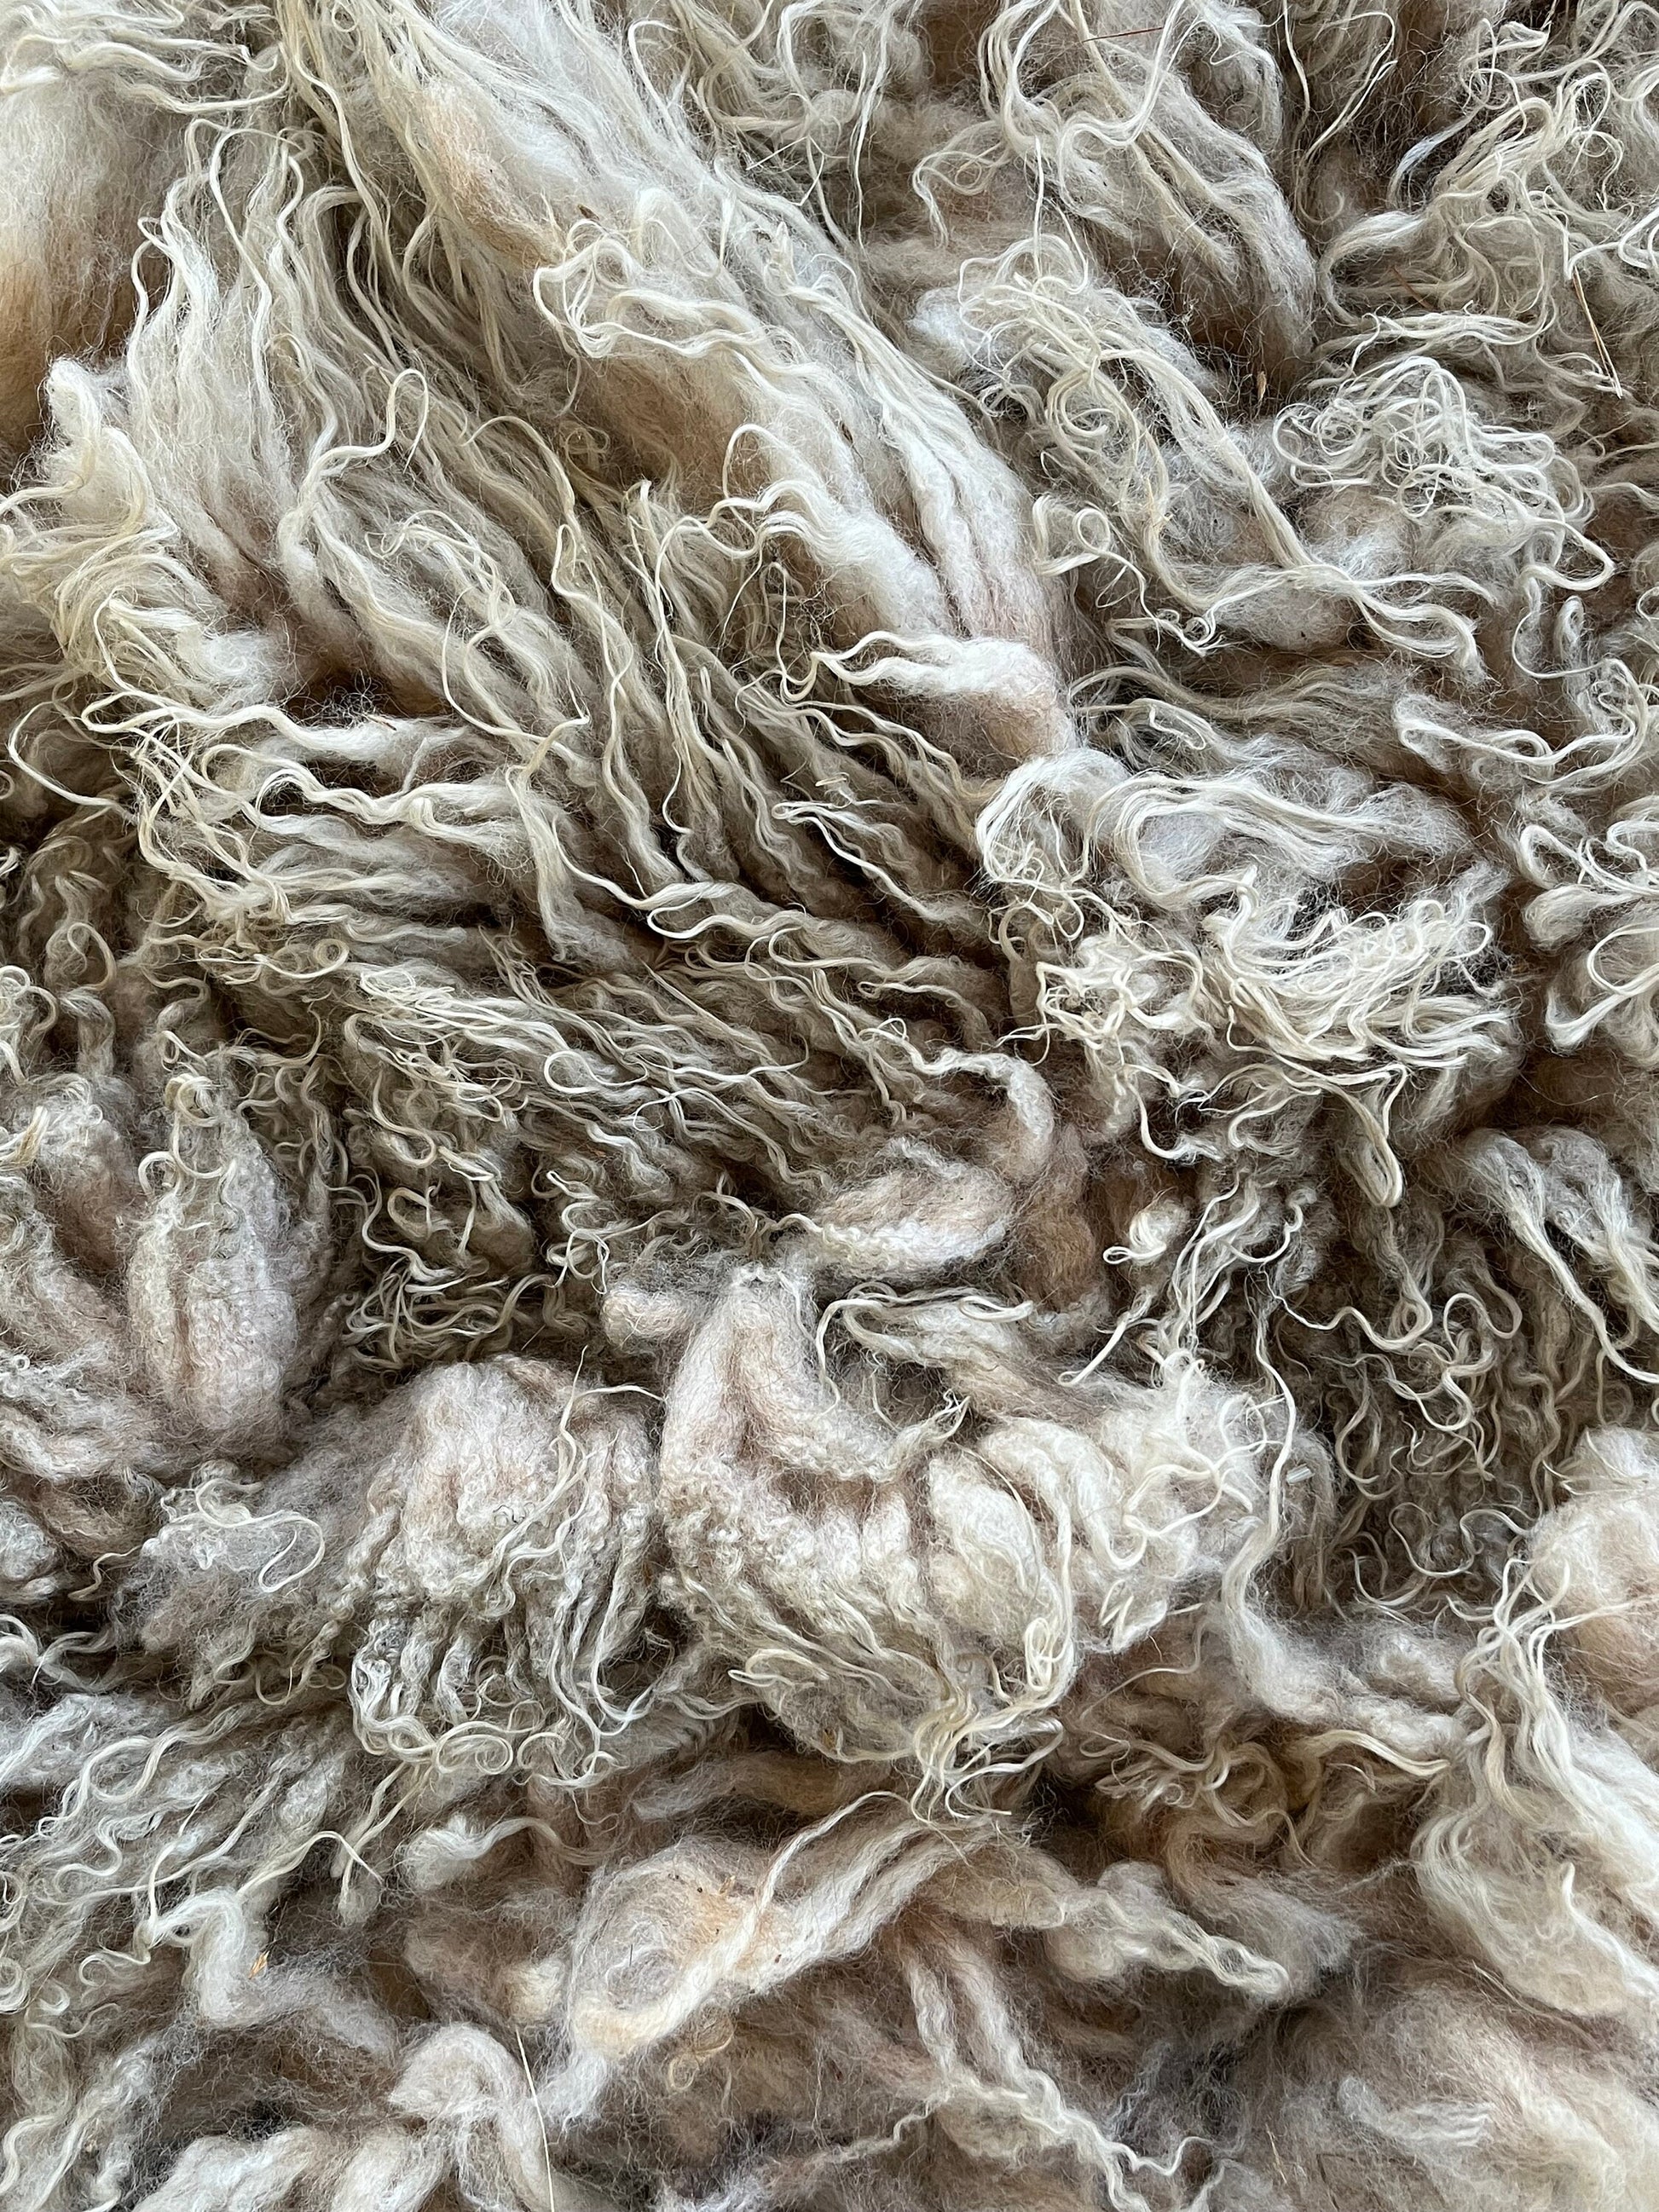 Icelandic Lamb Raw Wool Fleece (Fall Shearing)